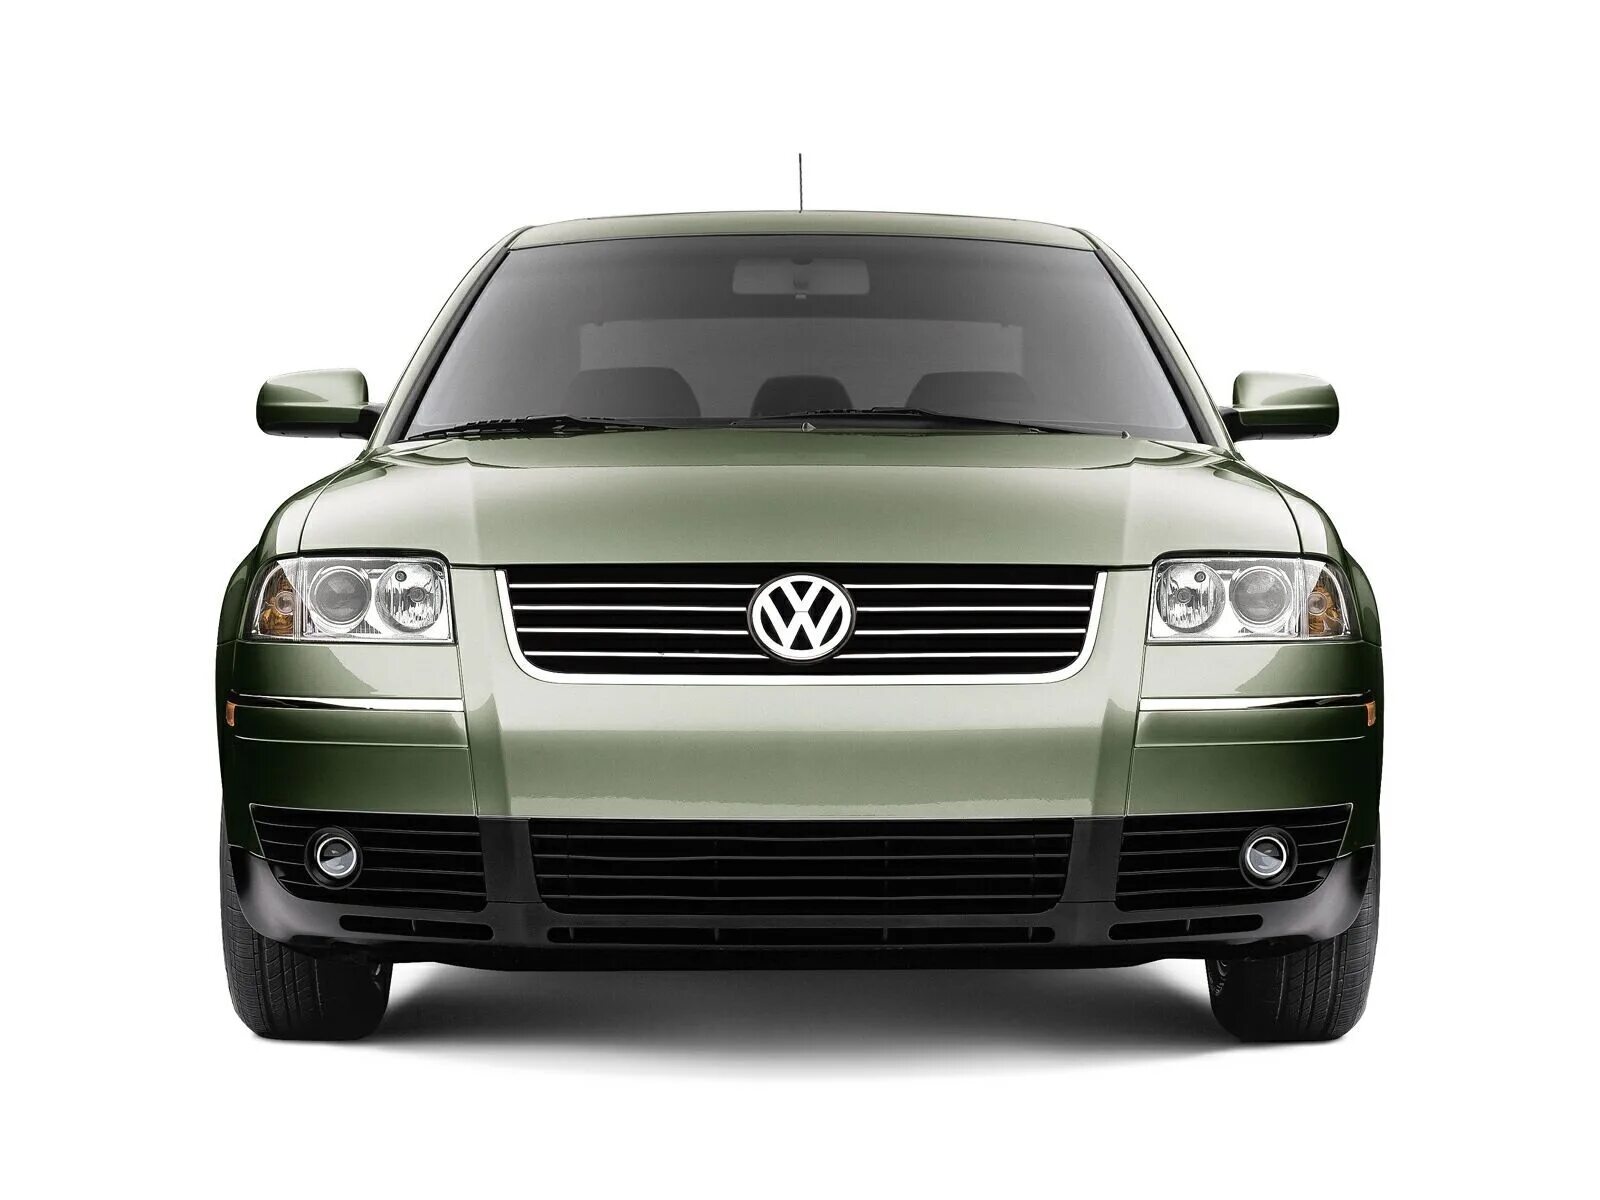 93 b 5. Фольксваген Пассат б5 зеленый. VW Passat b5 2003. VW Passat b5 зеленый. Volkswagen Passat b5 плюс.